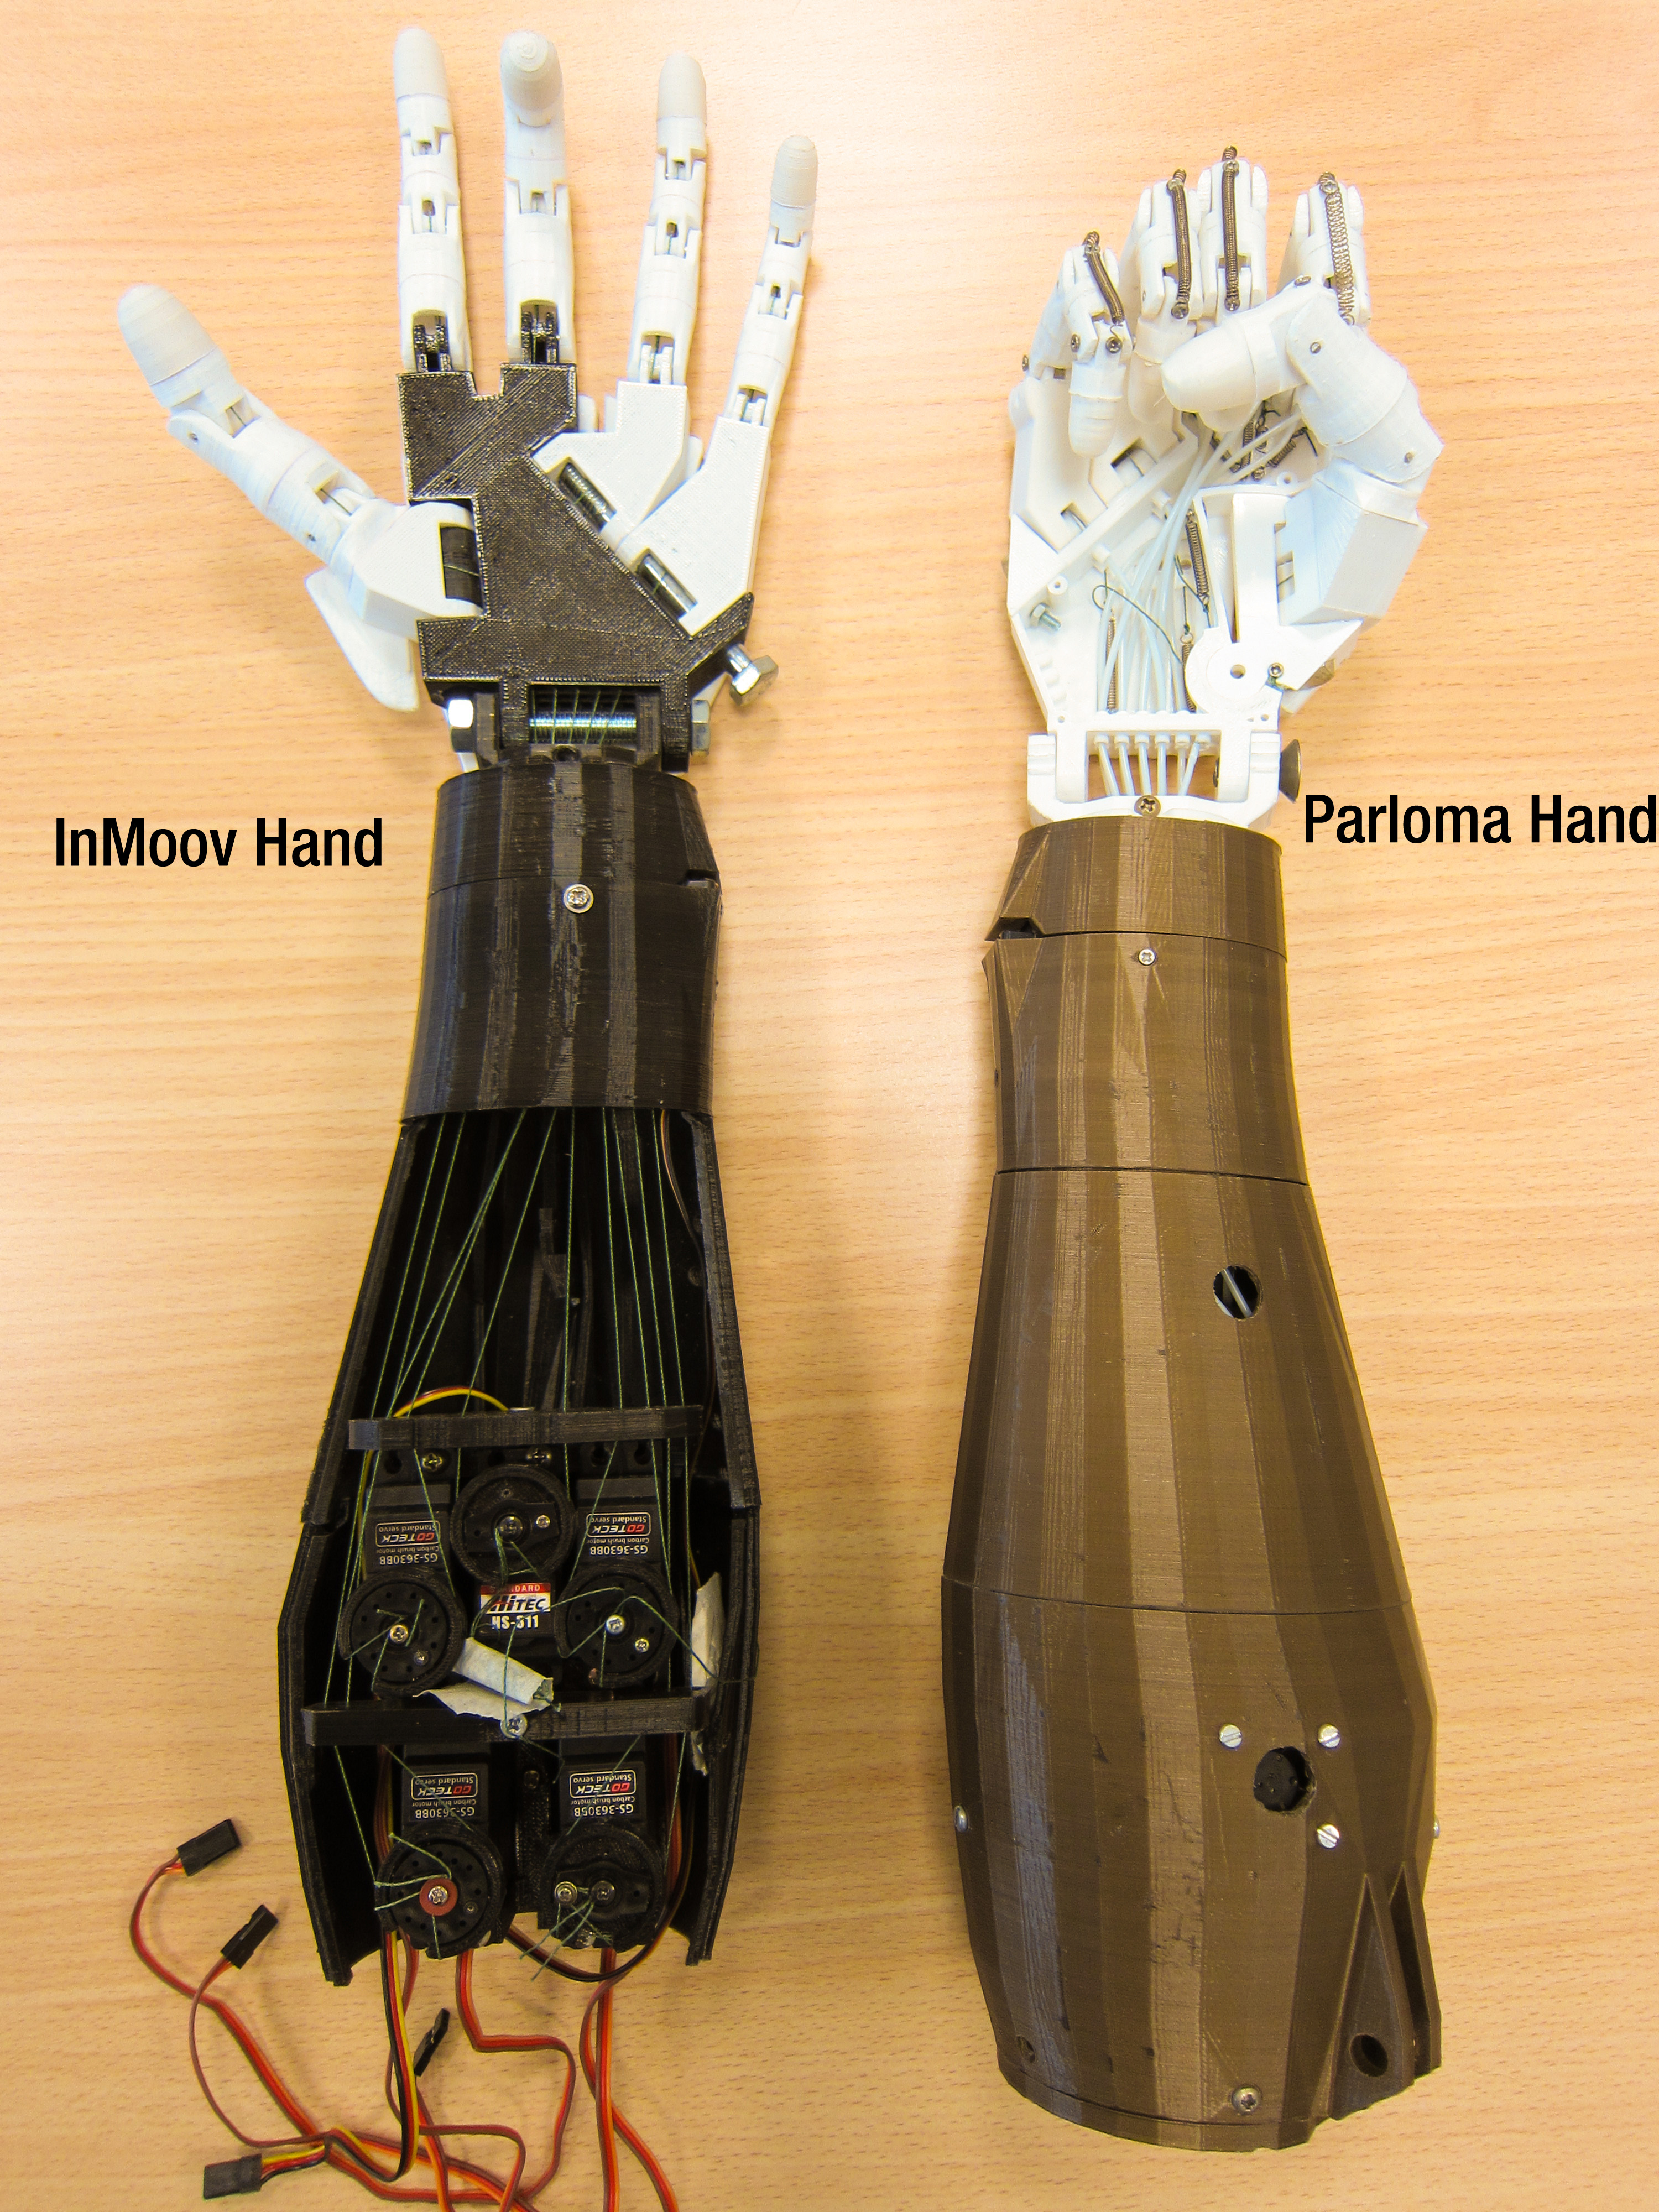 InMoov Hand and Parloma Hand